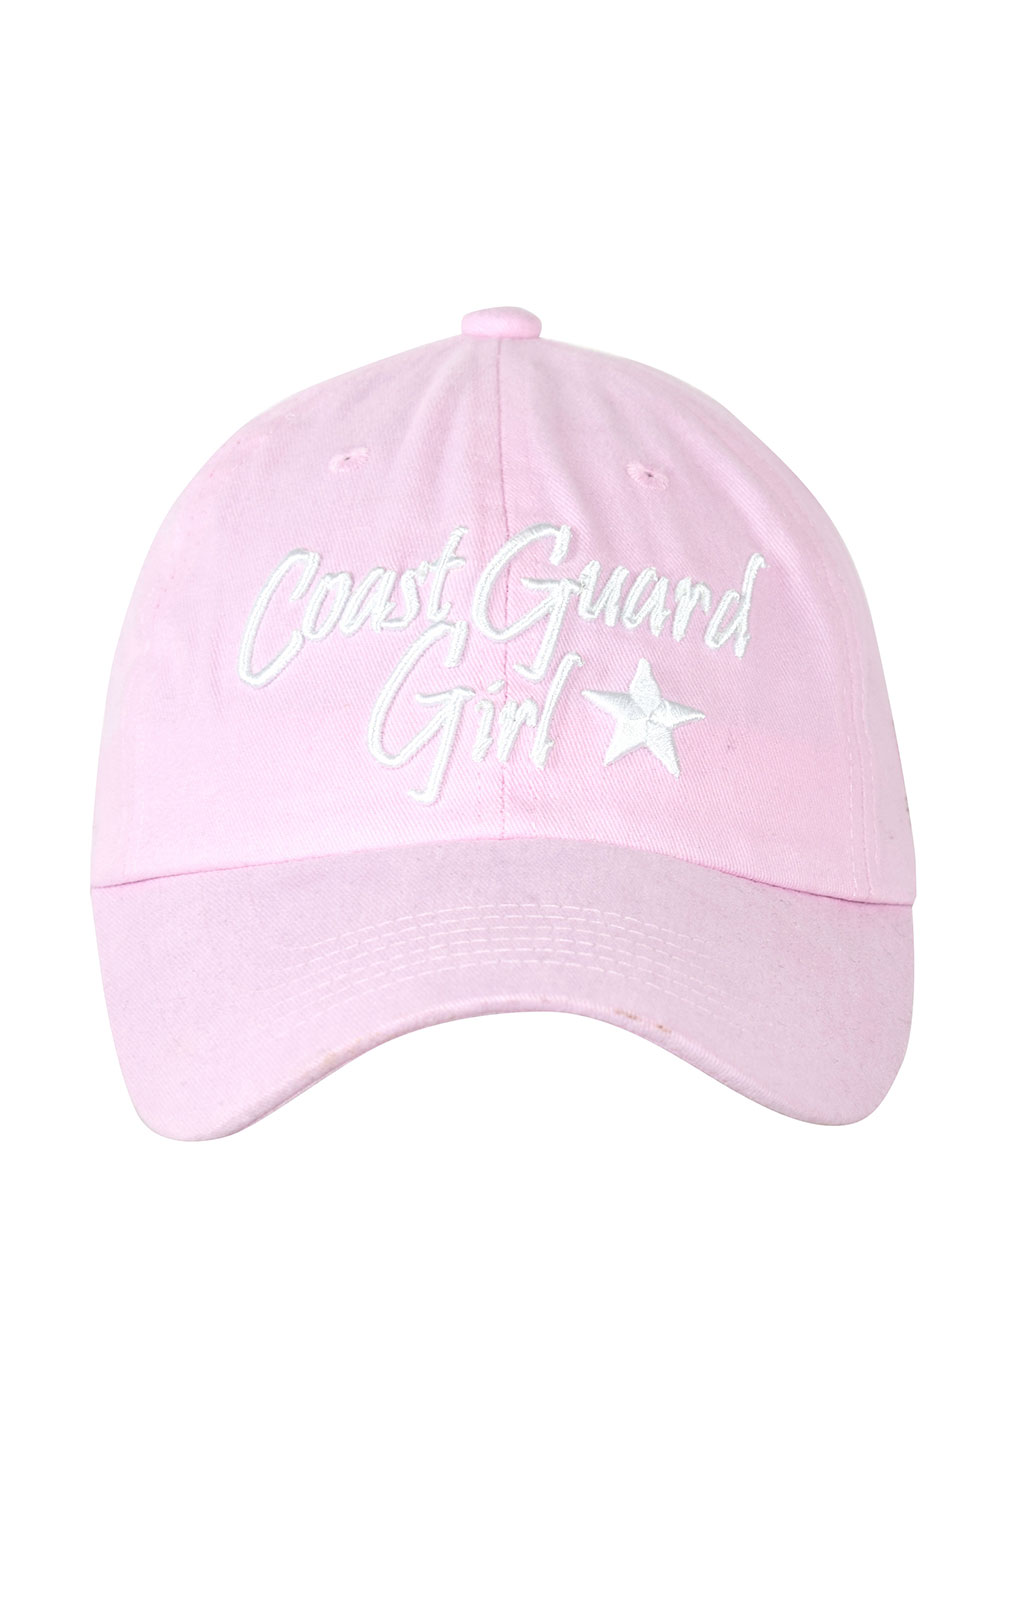 Бейсболка EC Cost Gueard Girl pink (5731) 